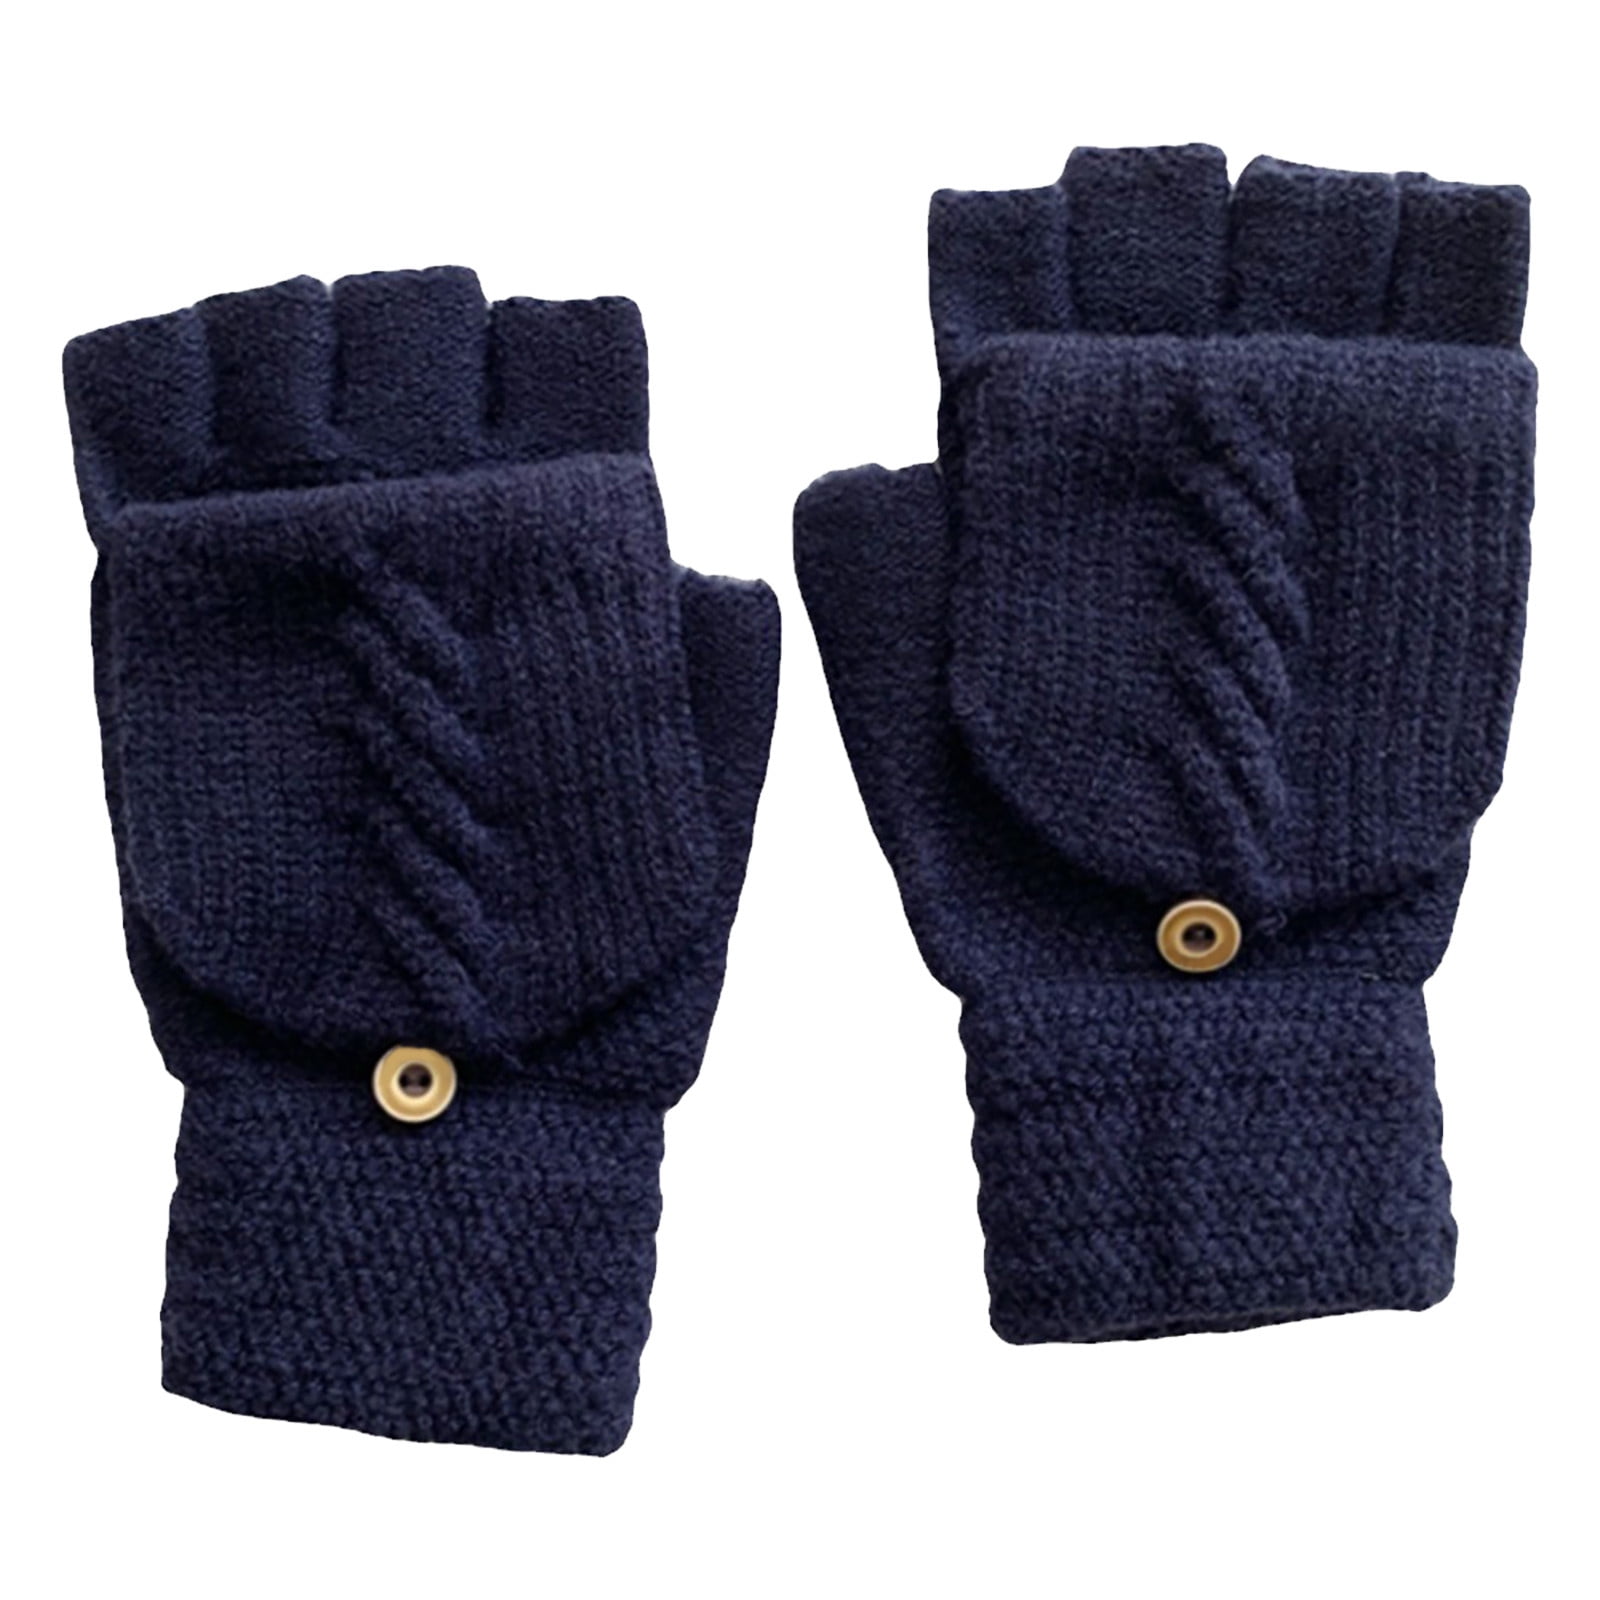 DB46 Durable Black Knitting Winter Fingerless USB Powered  Heated Gloves Tool 